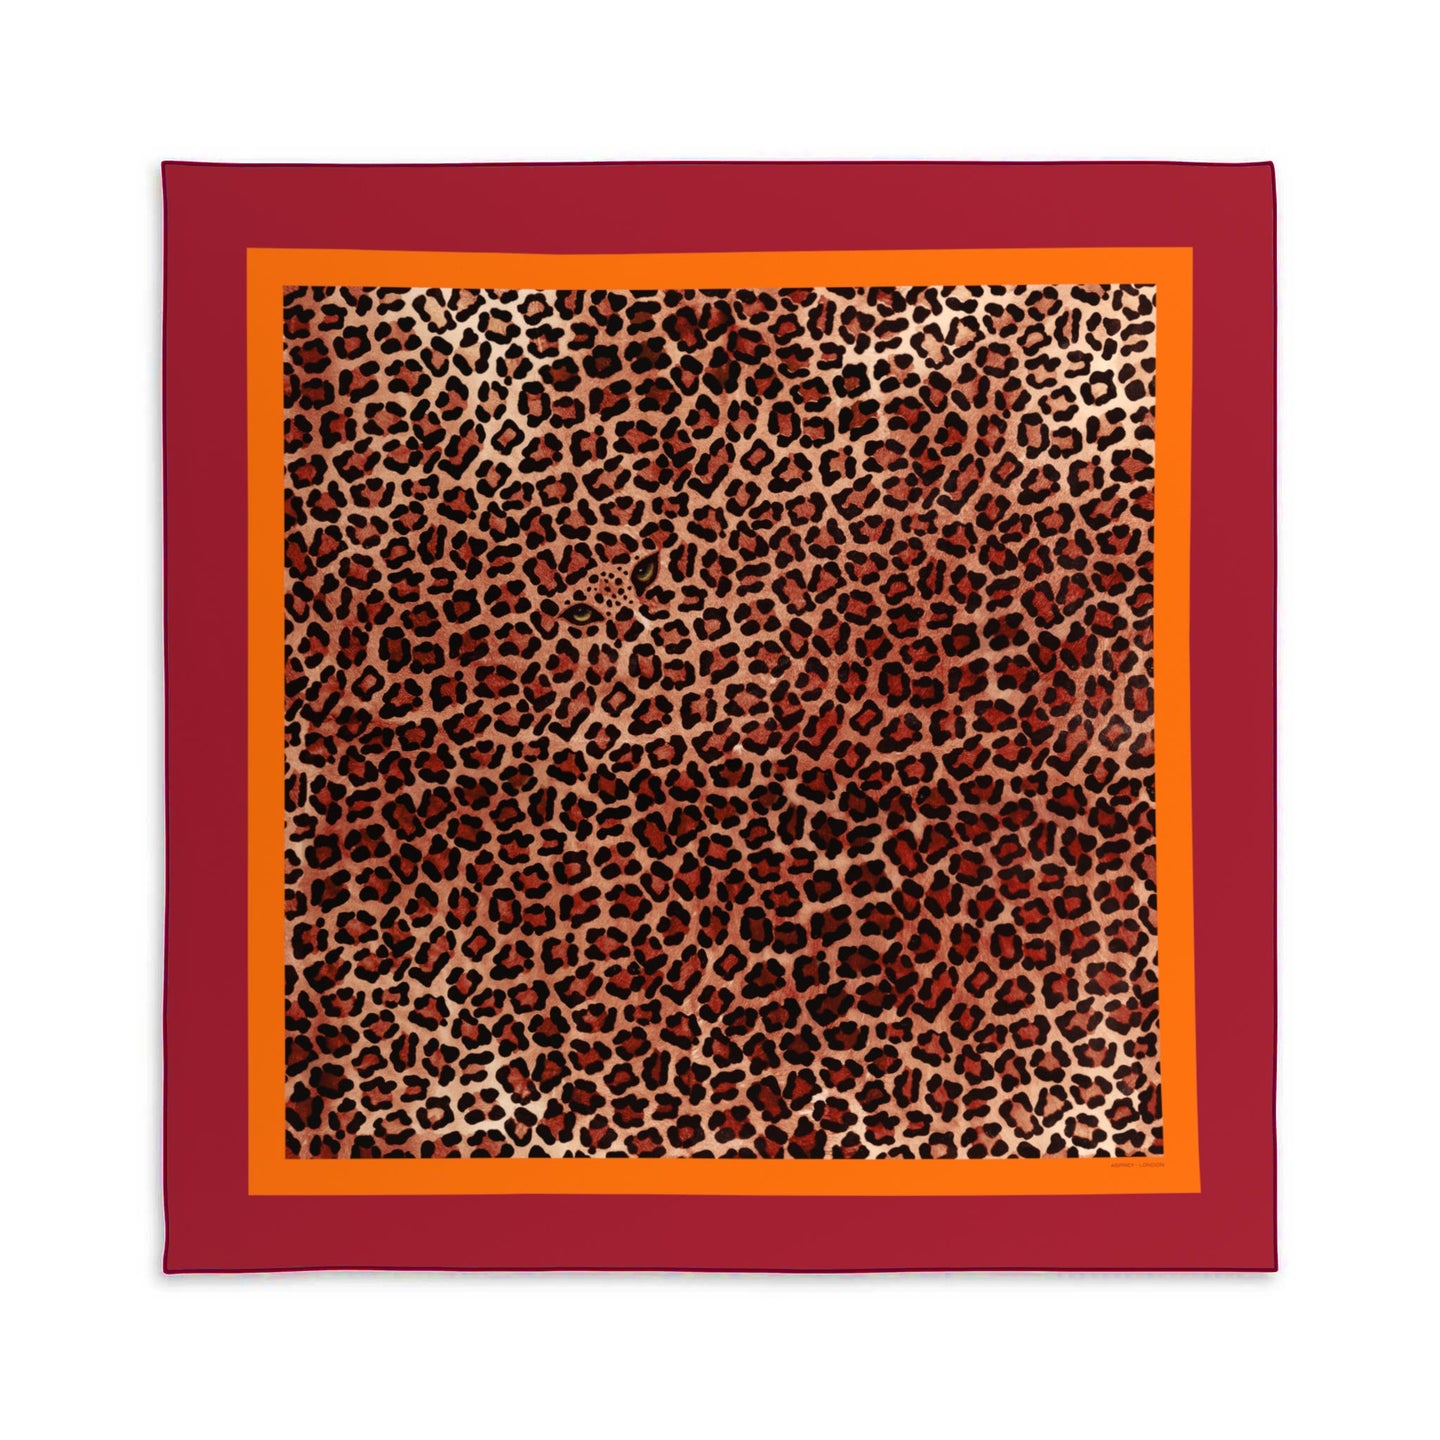 Leopard Silk Scarf